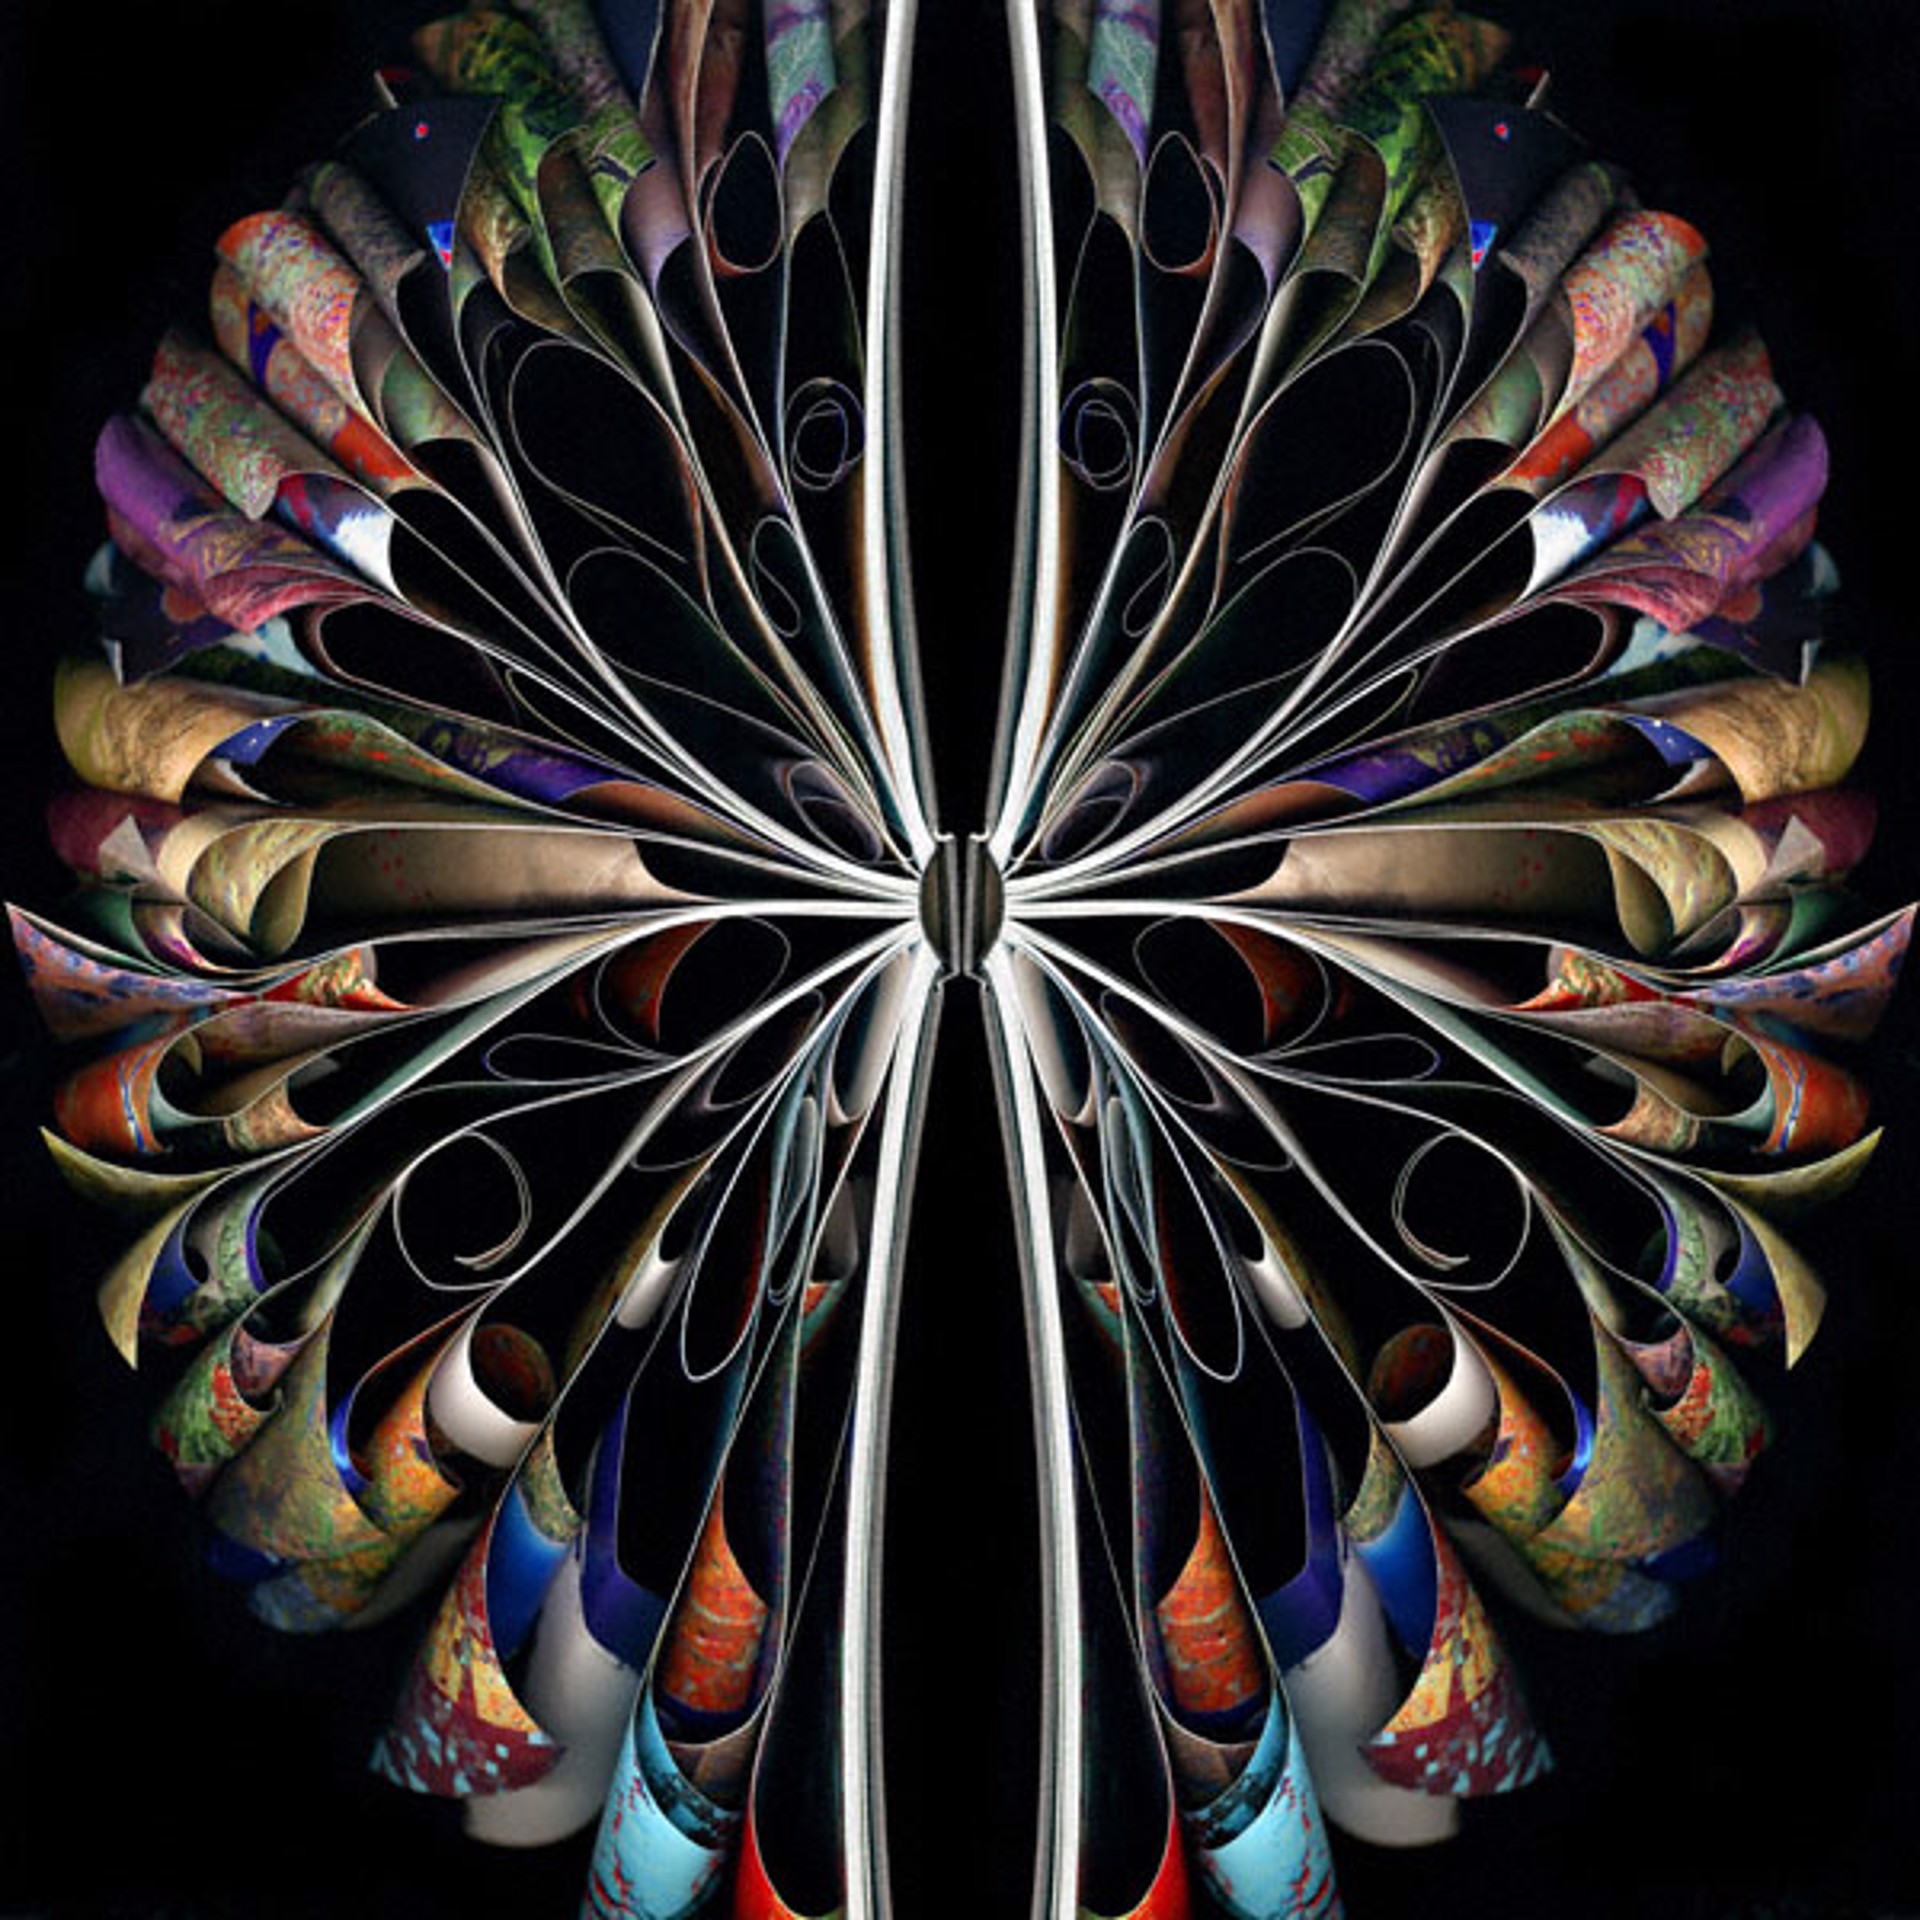 Kaleidoscope by Cara Barer